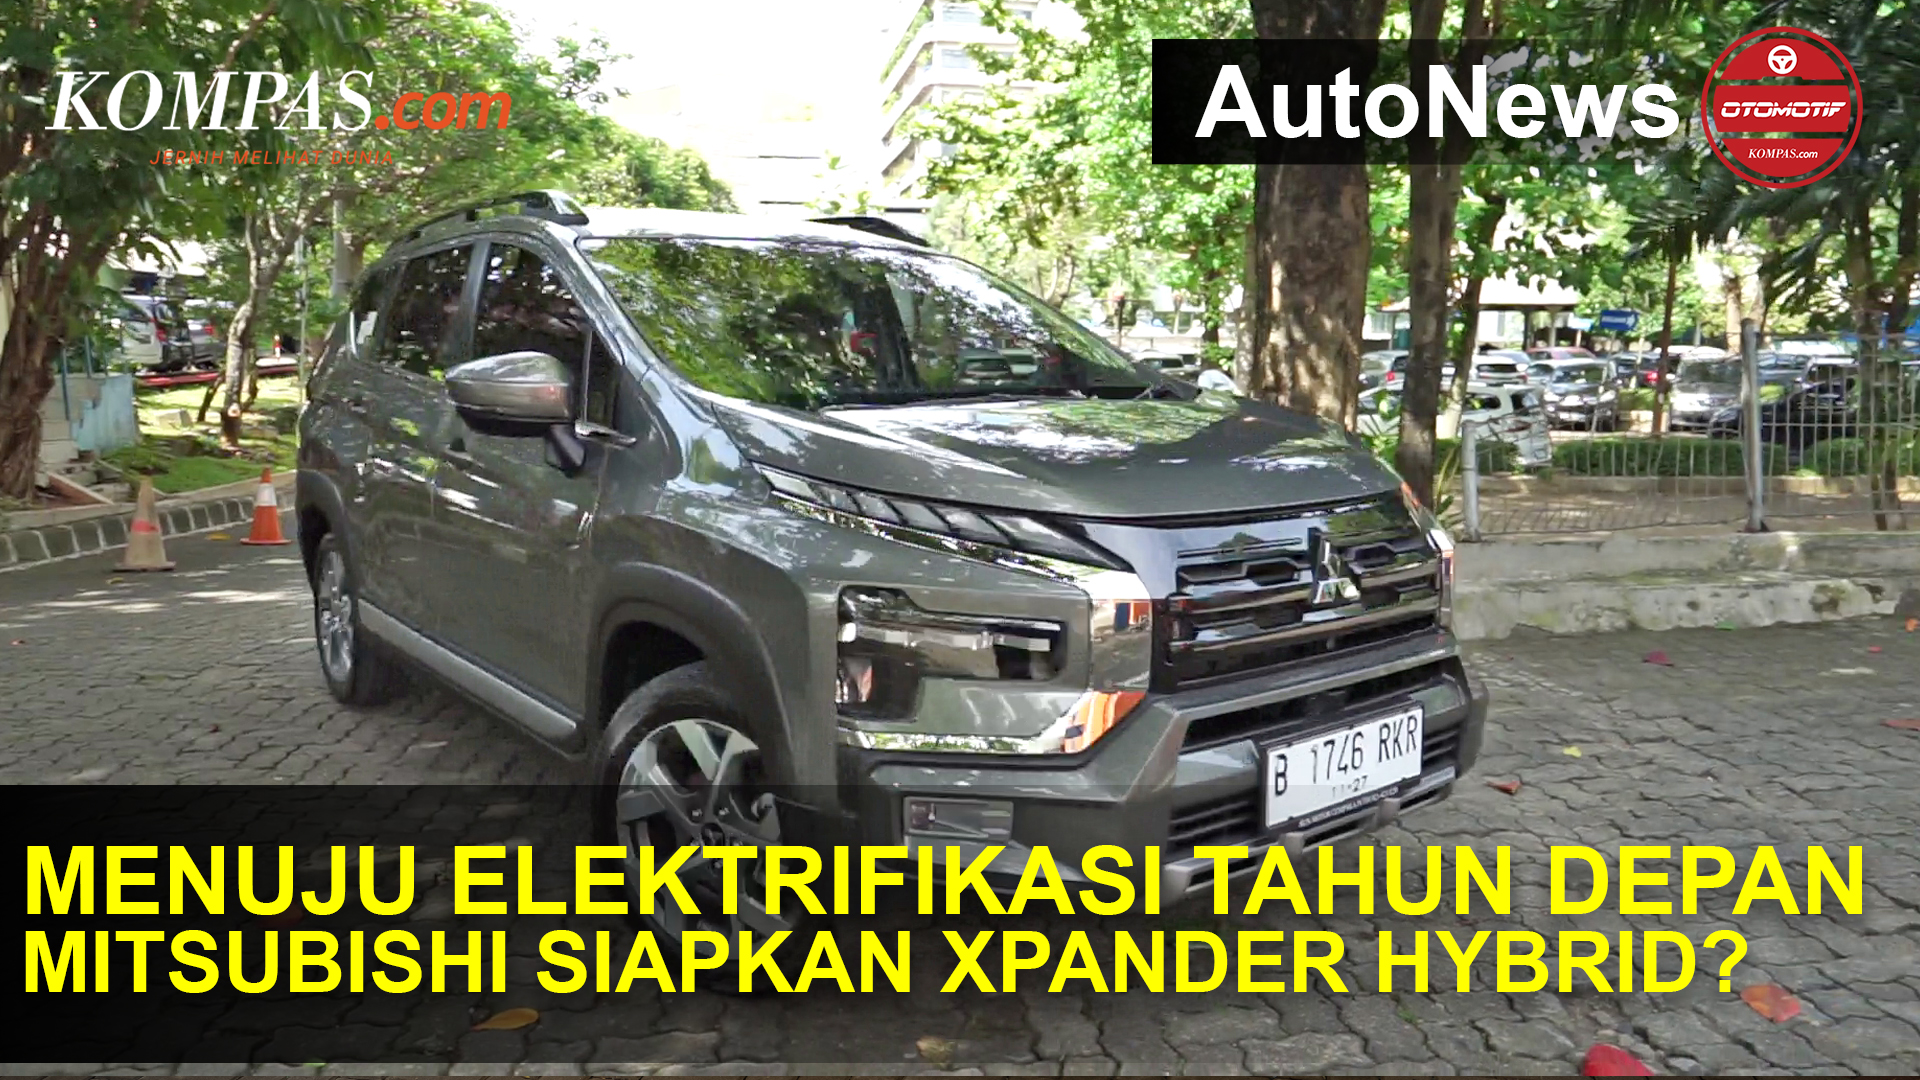 Mitsubishi Siap Sambut Elektrifikasi Tahun Depan, Xpander Hybrid?